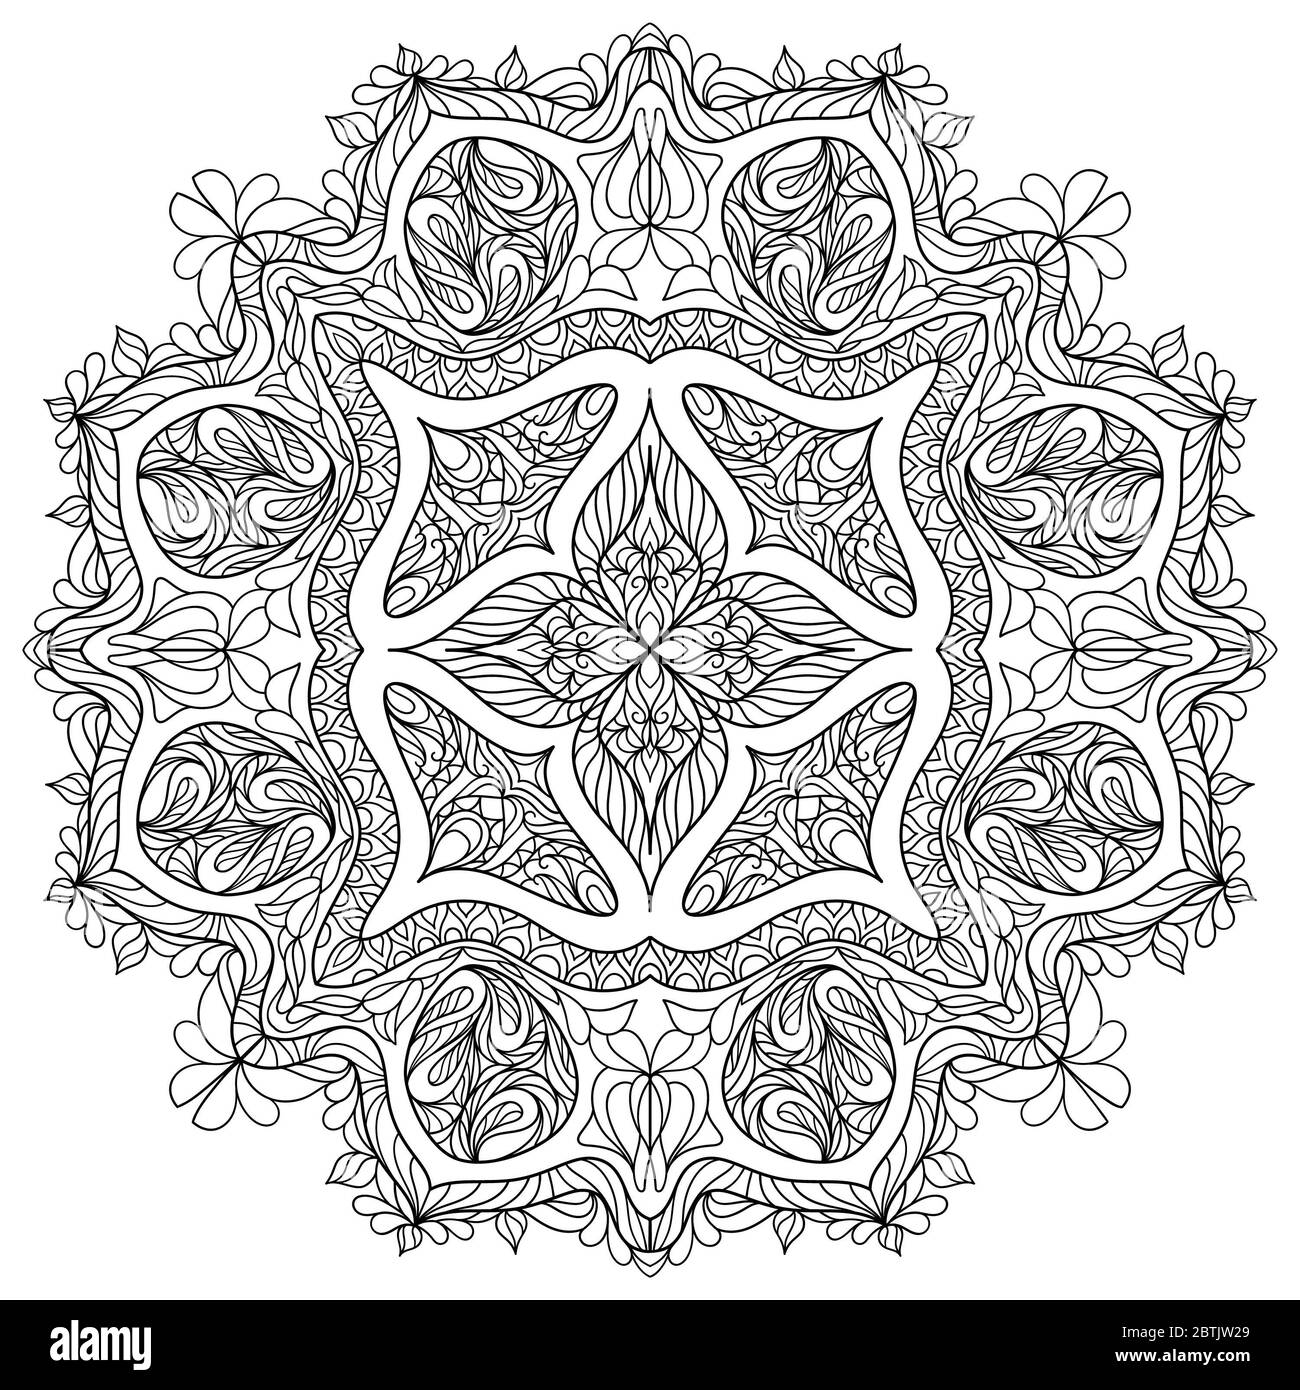 Zentangle coloring  page for adults anti stress with botanical decorative mandala Stock Photo